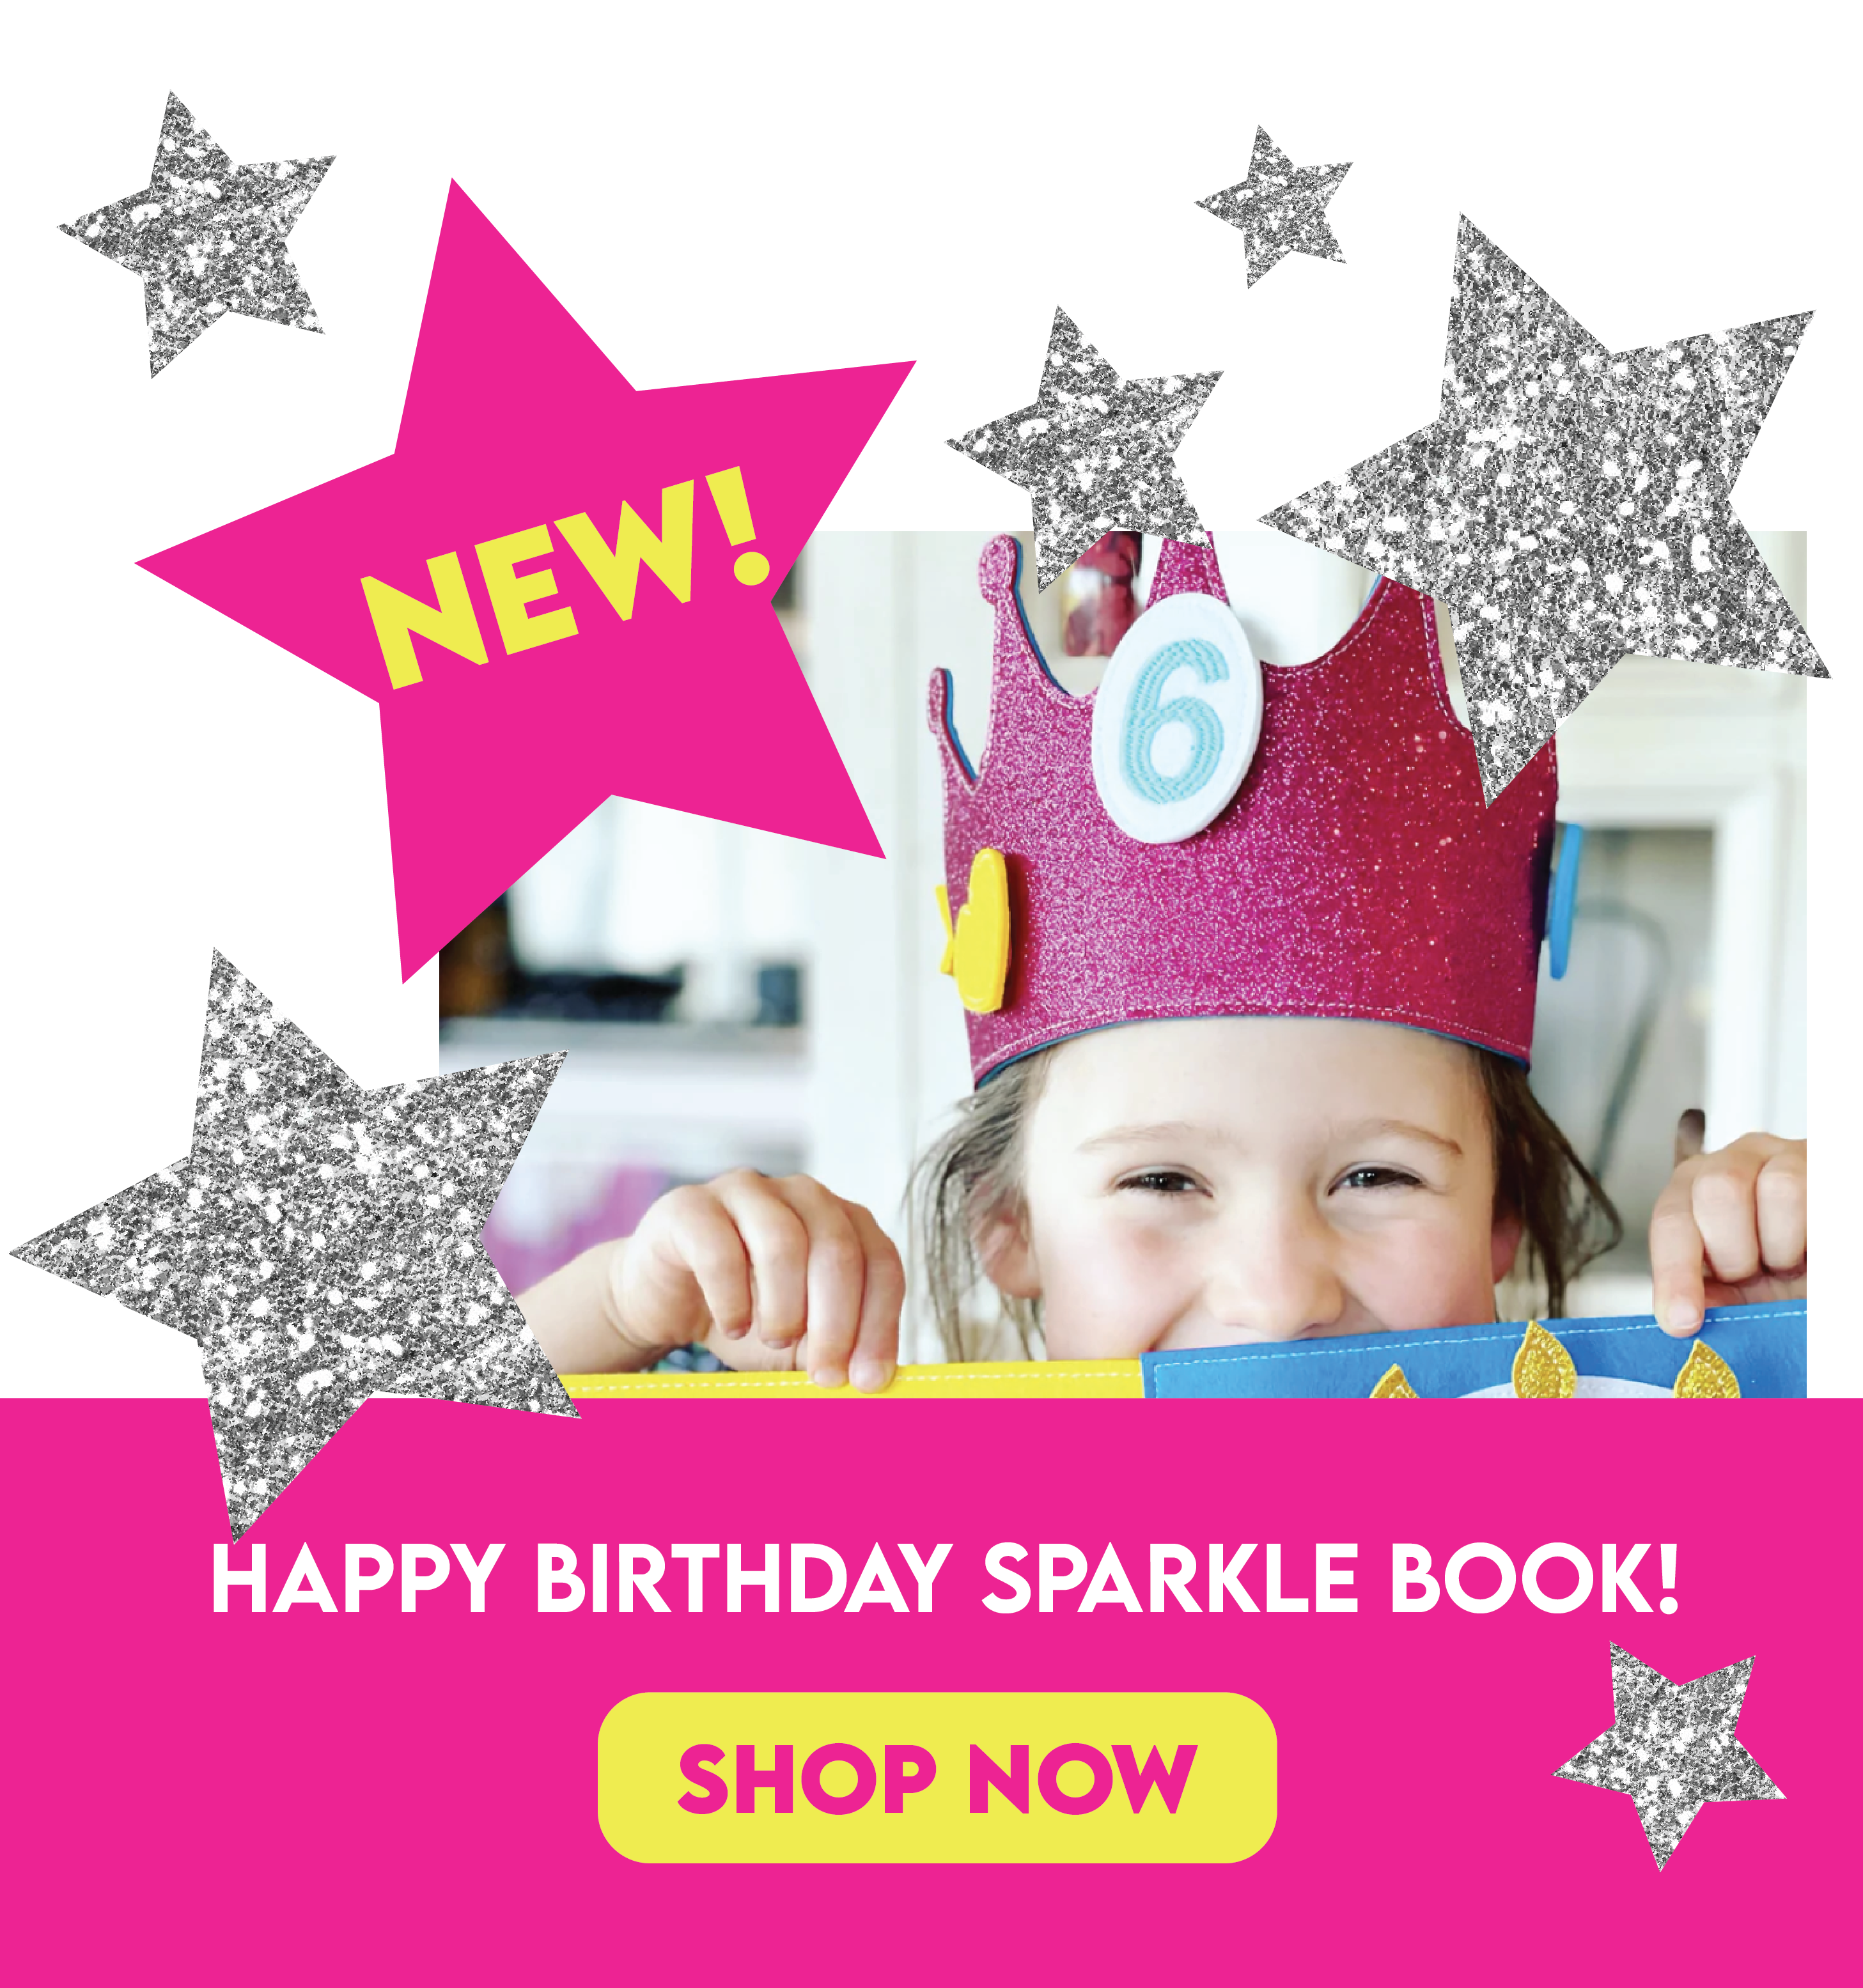 New happy birthday sparkle book shop now